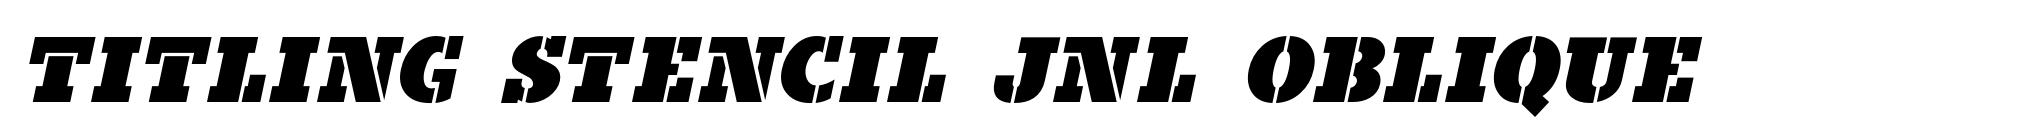 Titling Stencil JNL Oblique image